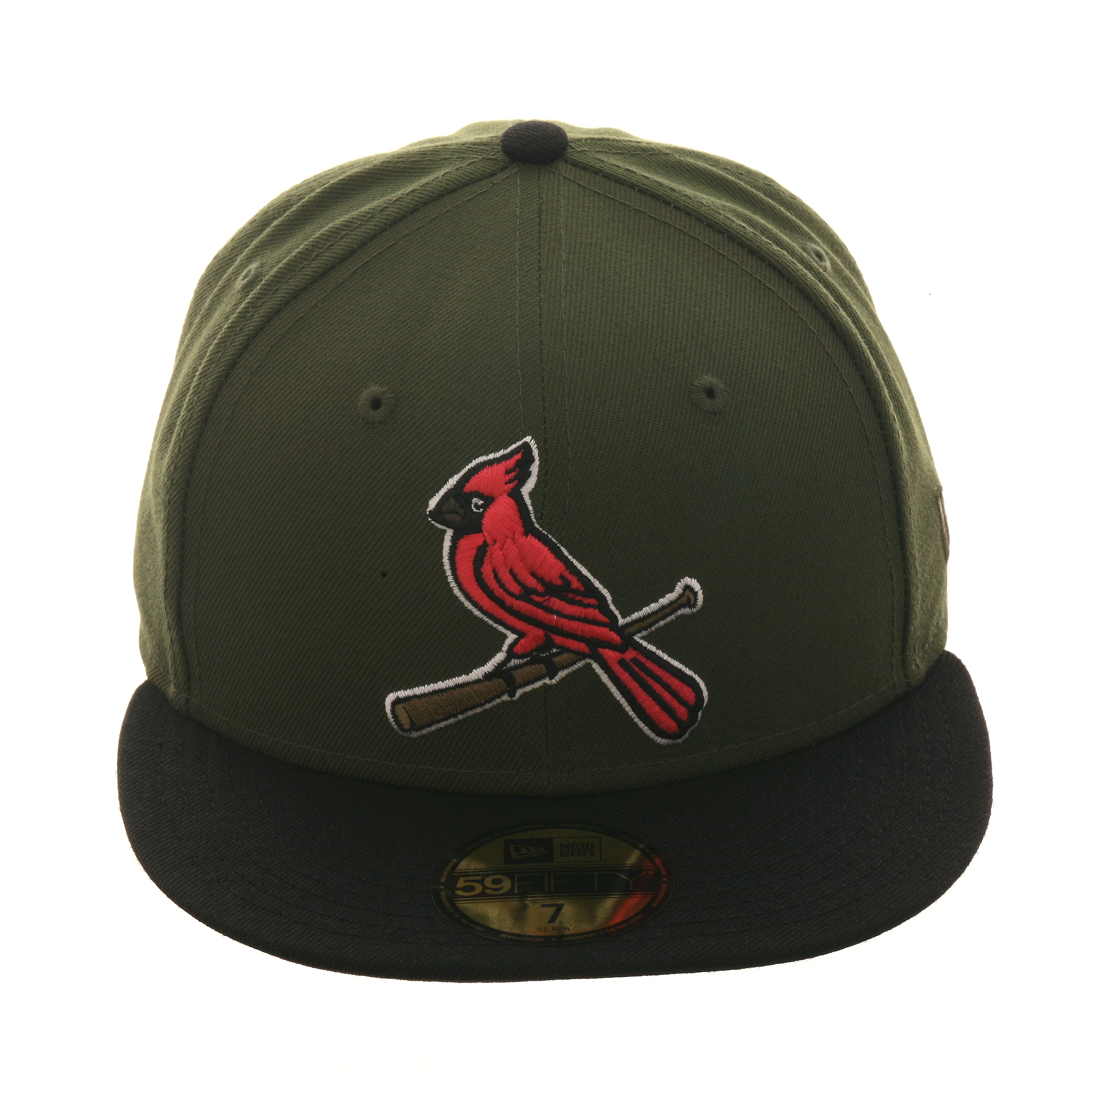 Exclusive New Era St. Louis Cardinals Alternate Hat - 2T Light Blue, Red